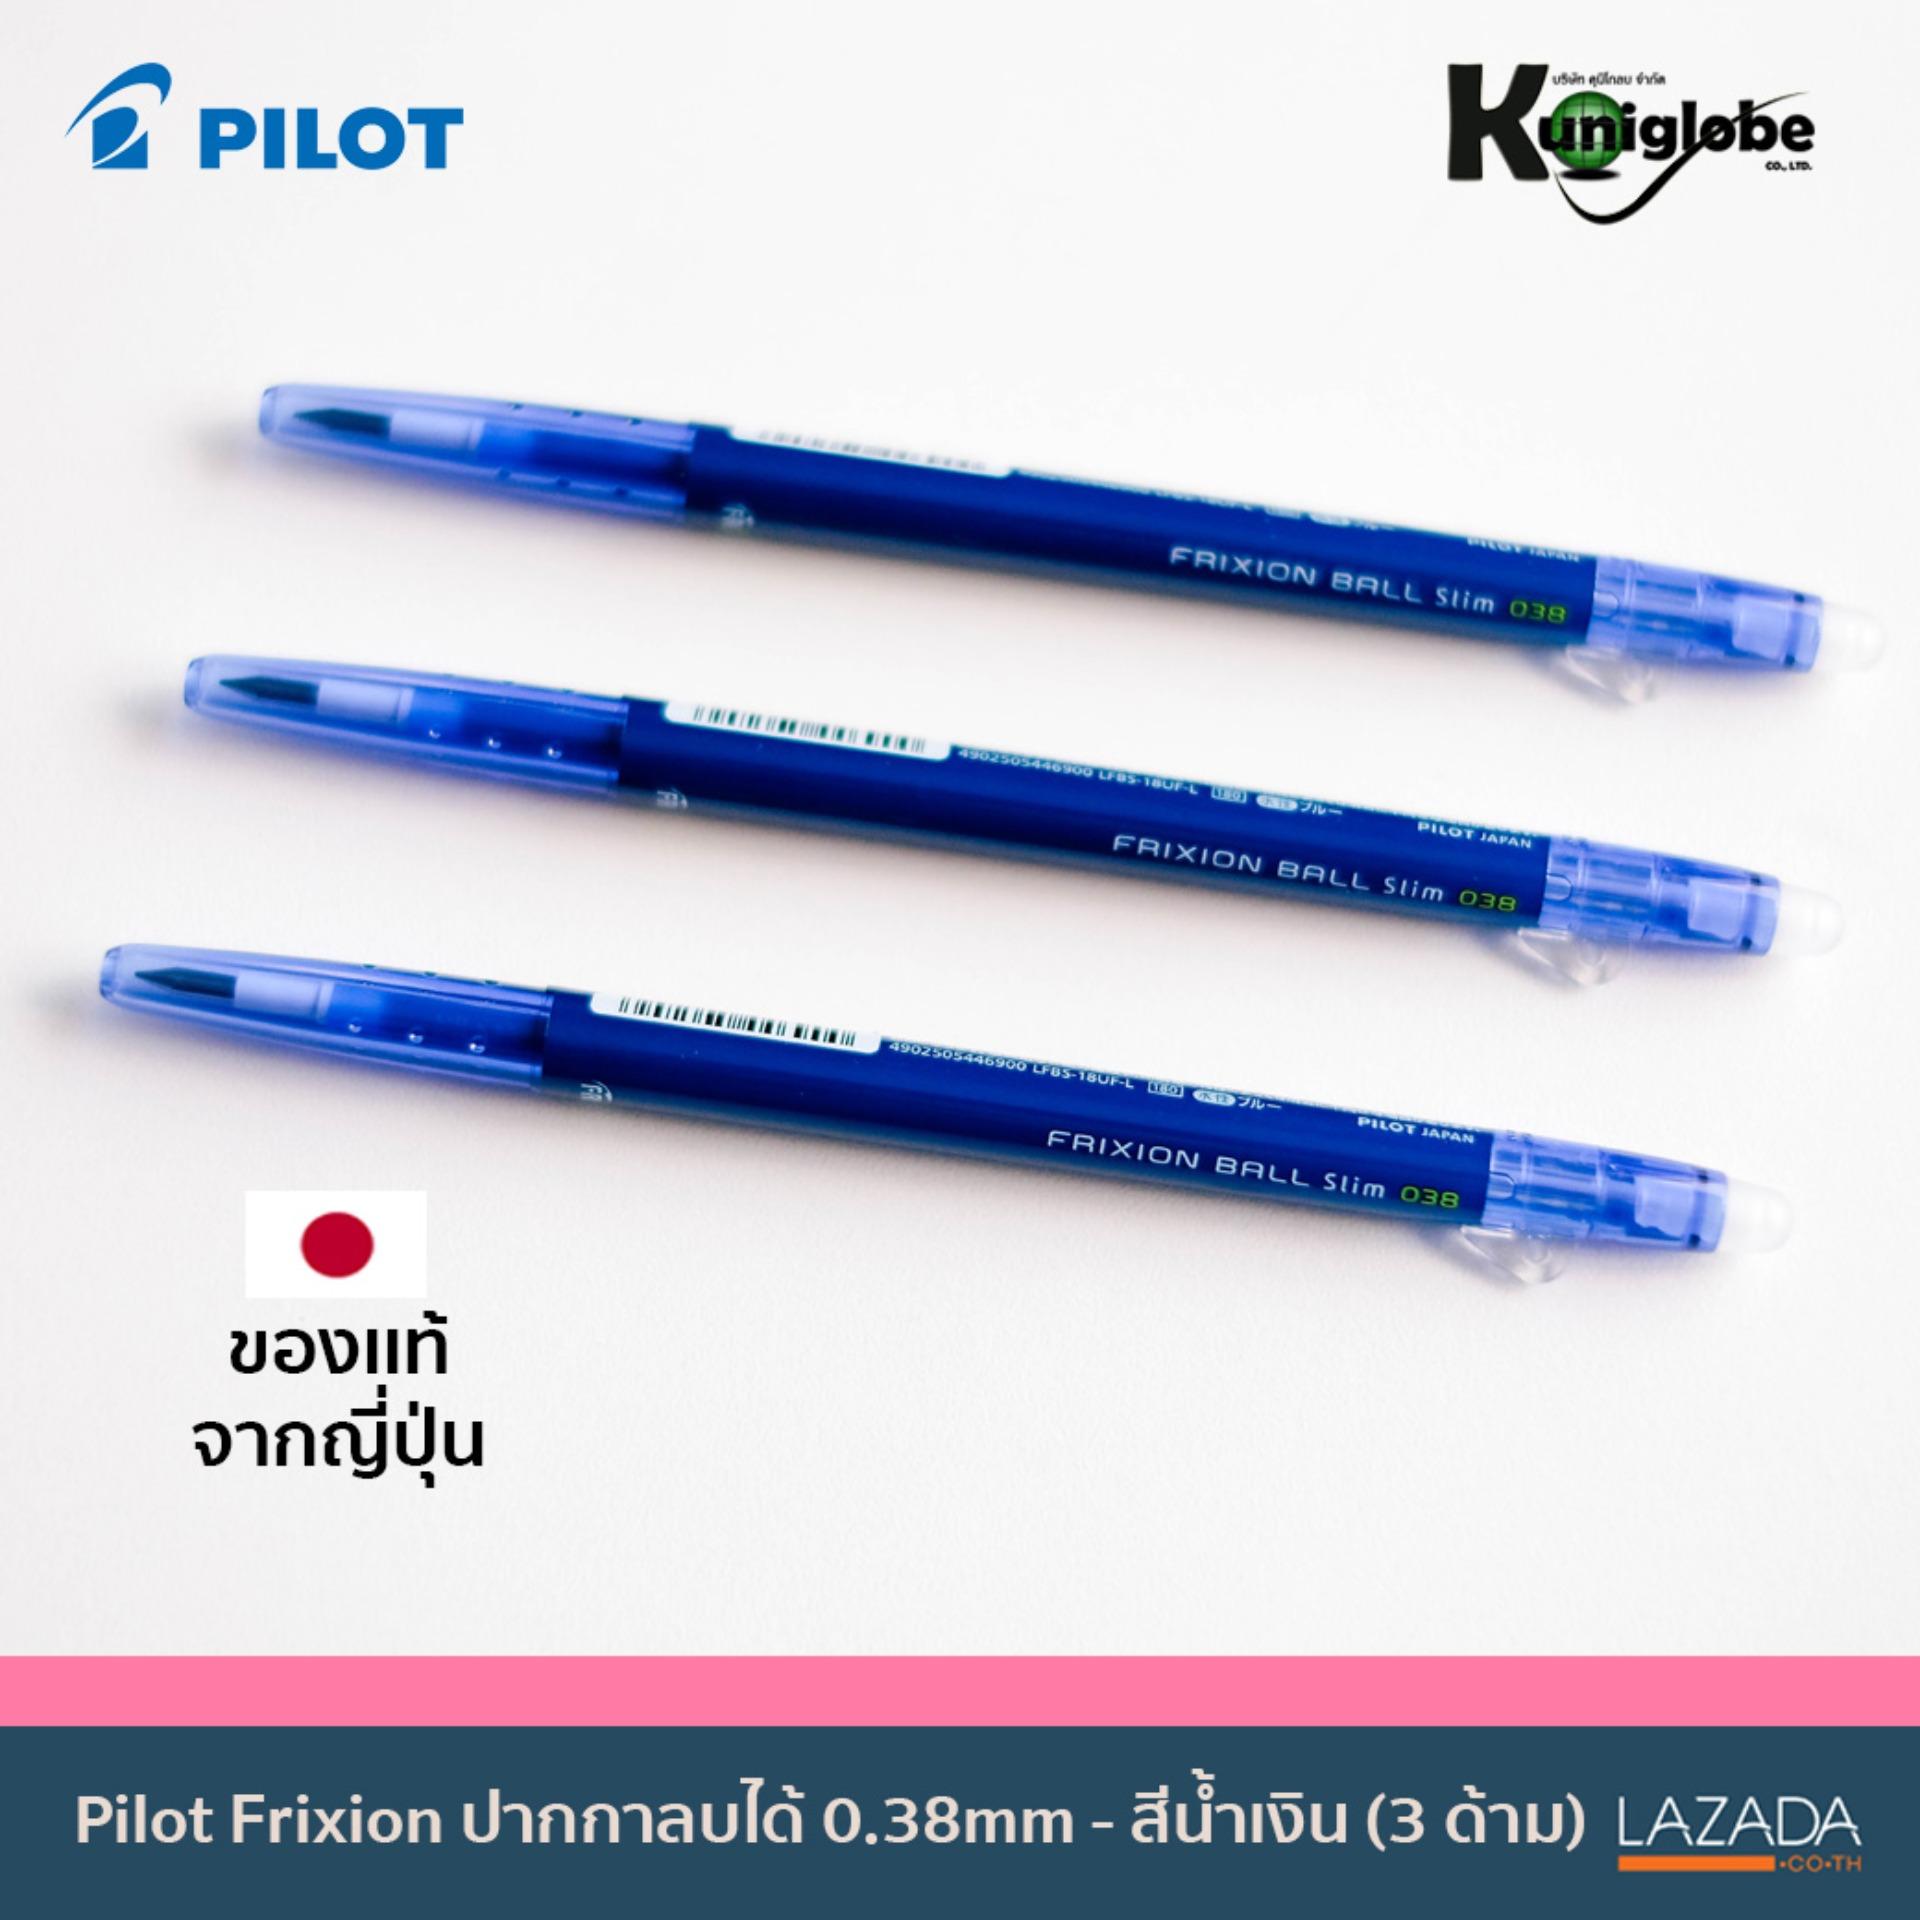 Pilot Frixion ปากกาลบได้ 0.38mm - สีน้ำเงิน (3 ด้าม)